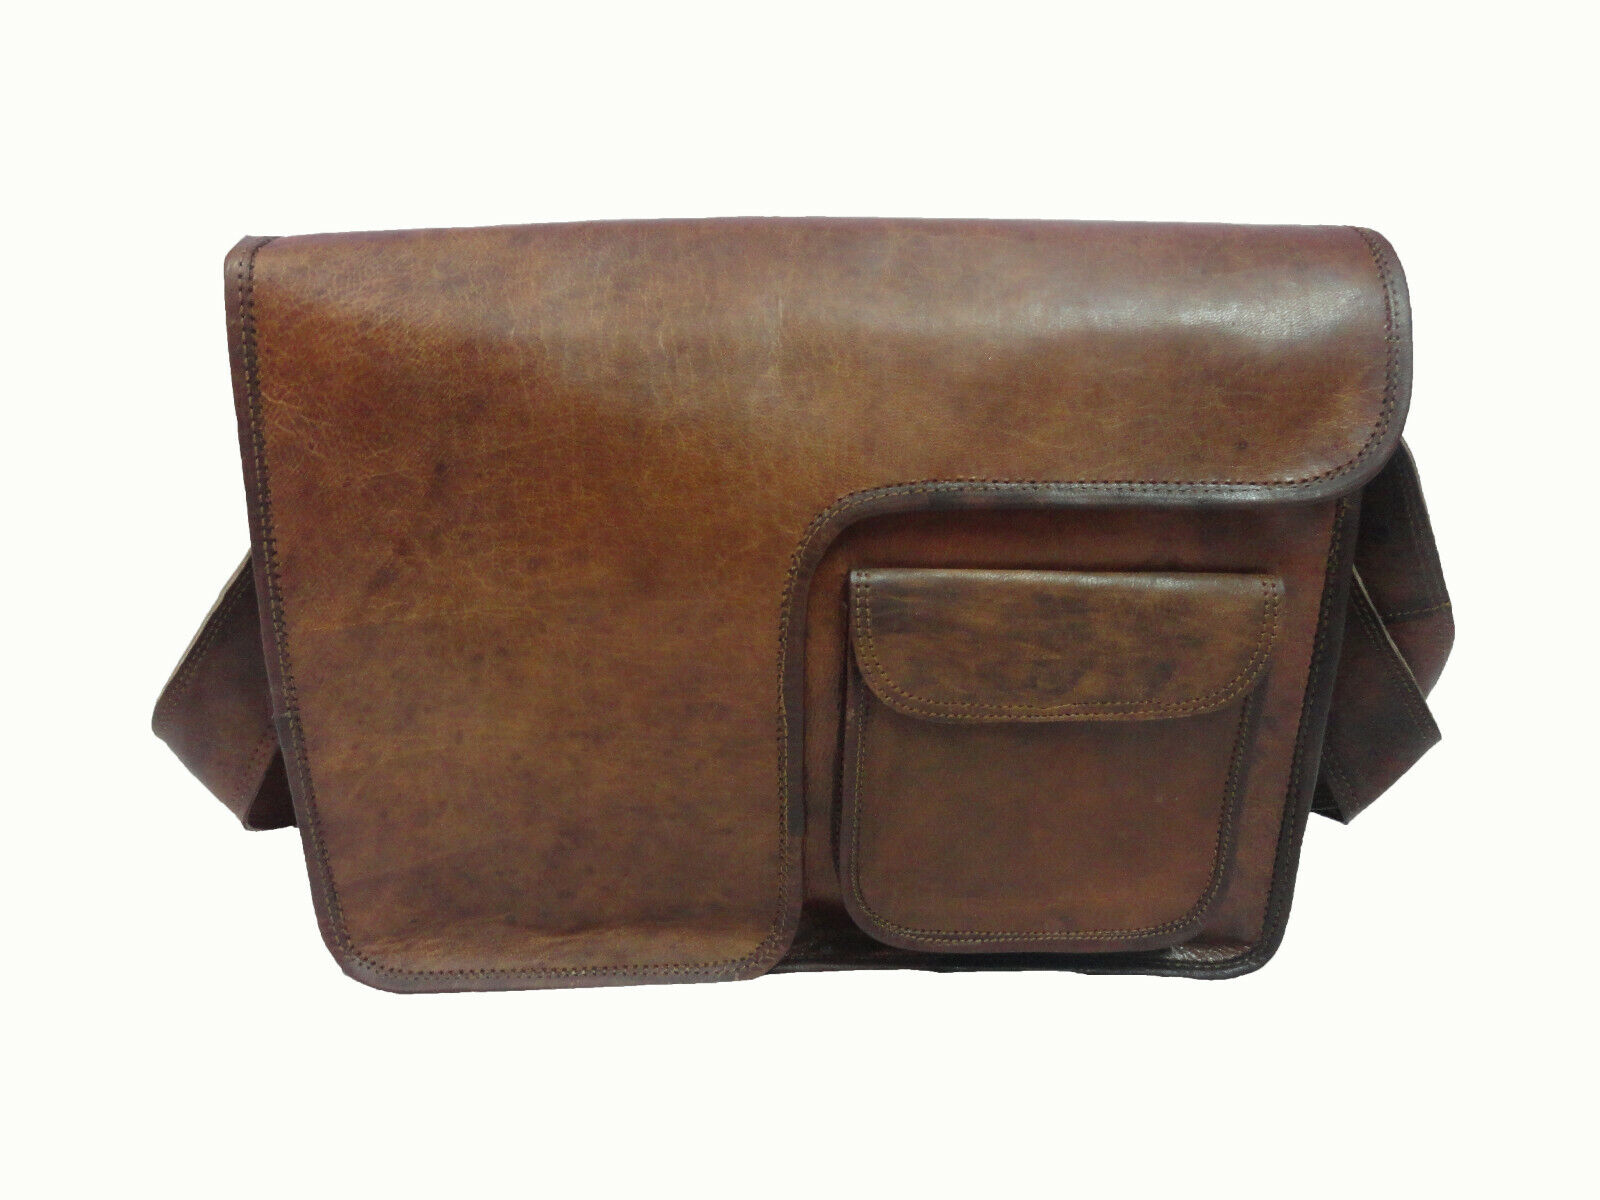 15 In Real Leather Messenger Bag Laptop Satchel Office School Crossbody Shoulder